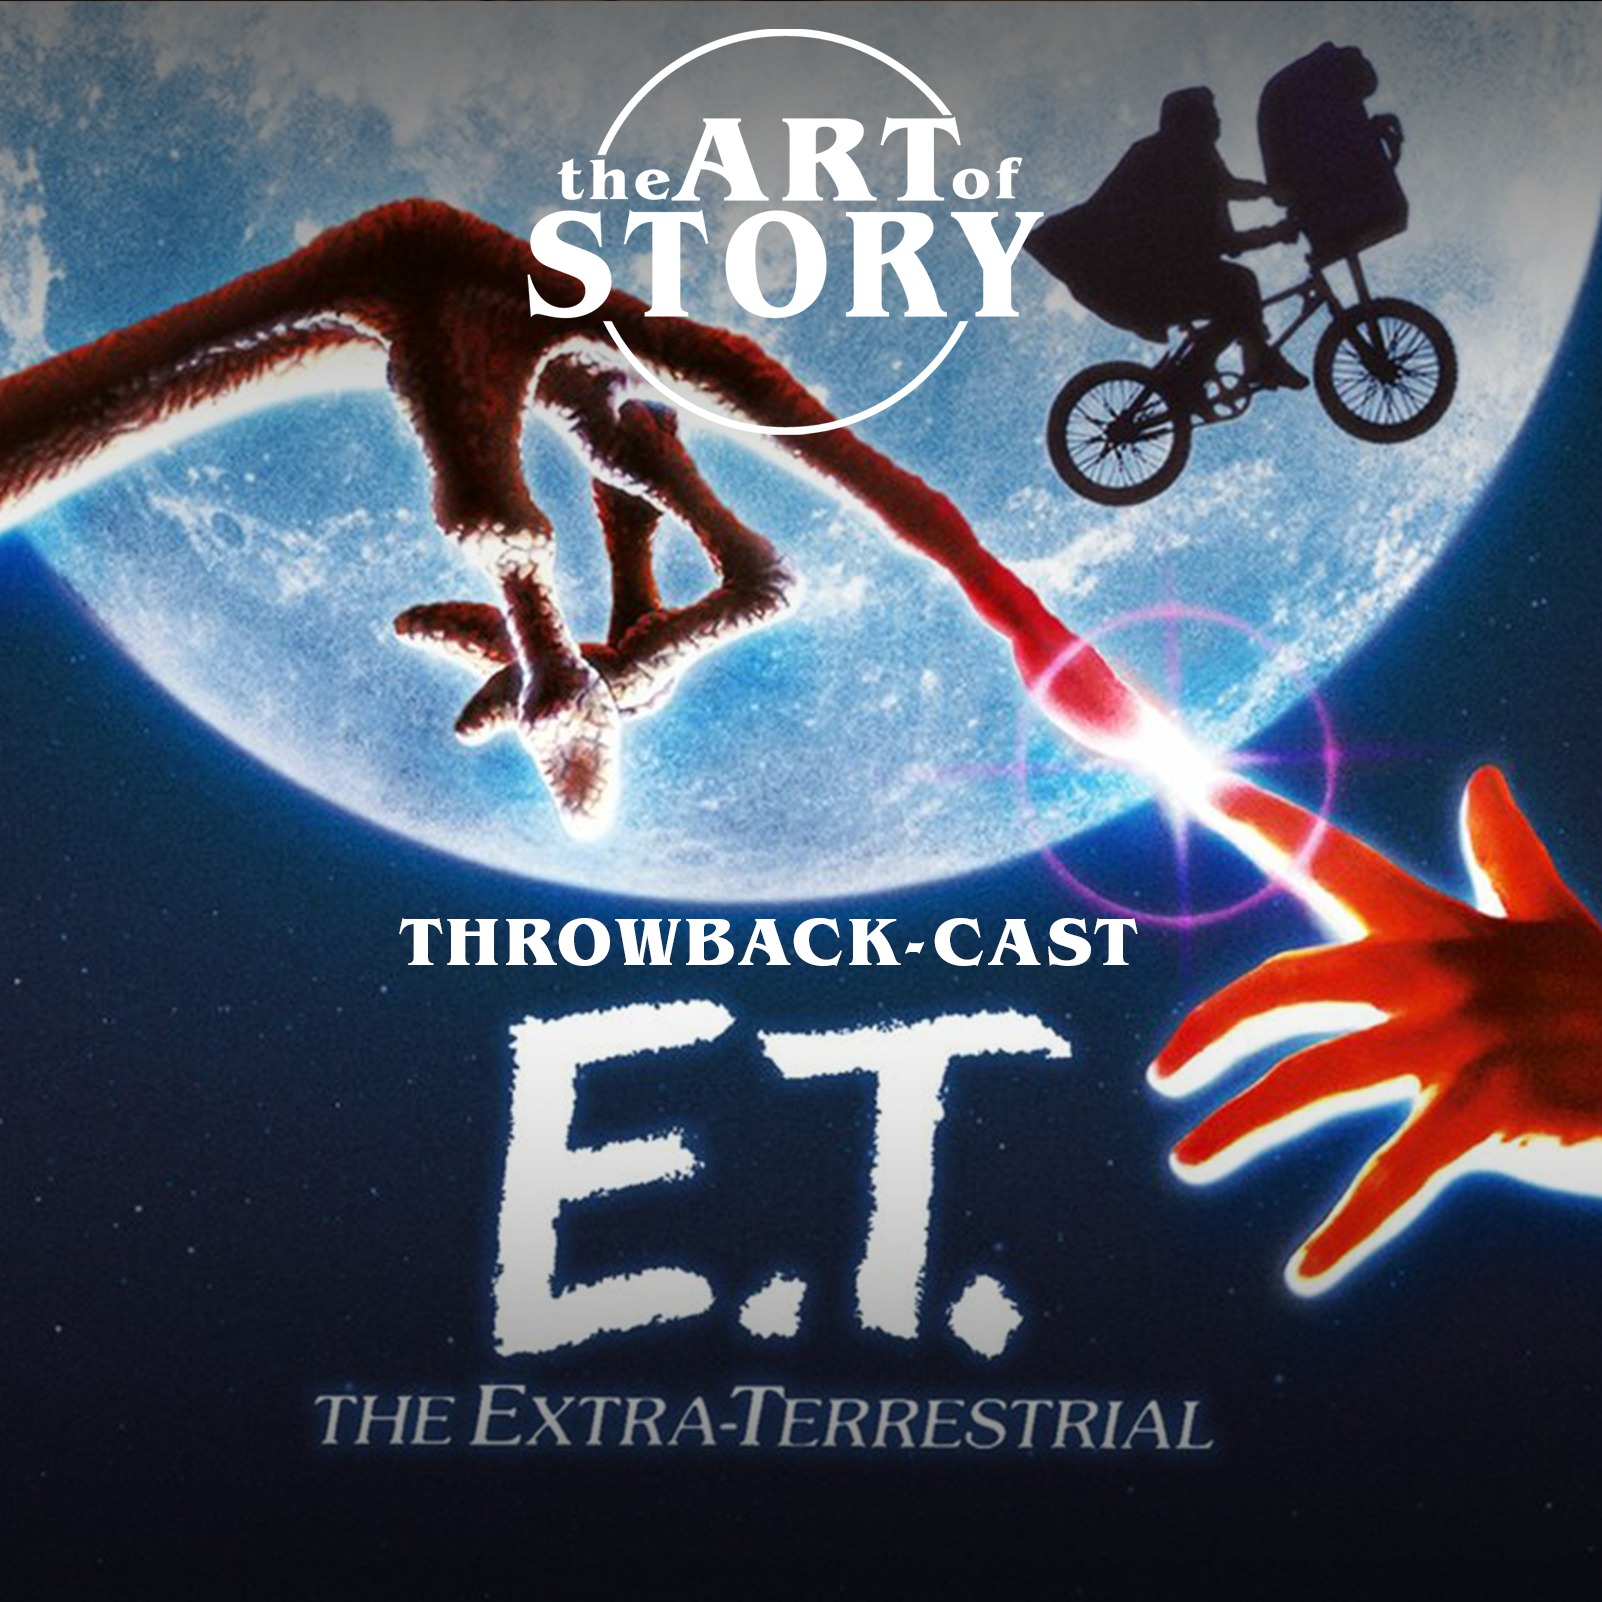 EPISODE 10: E.T. THE EXTRA-TERRESTRIAL